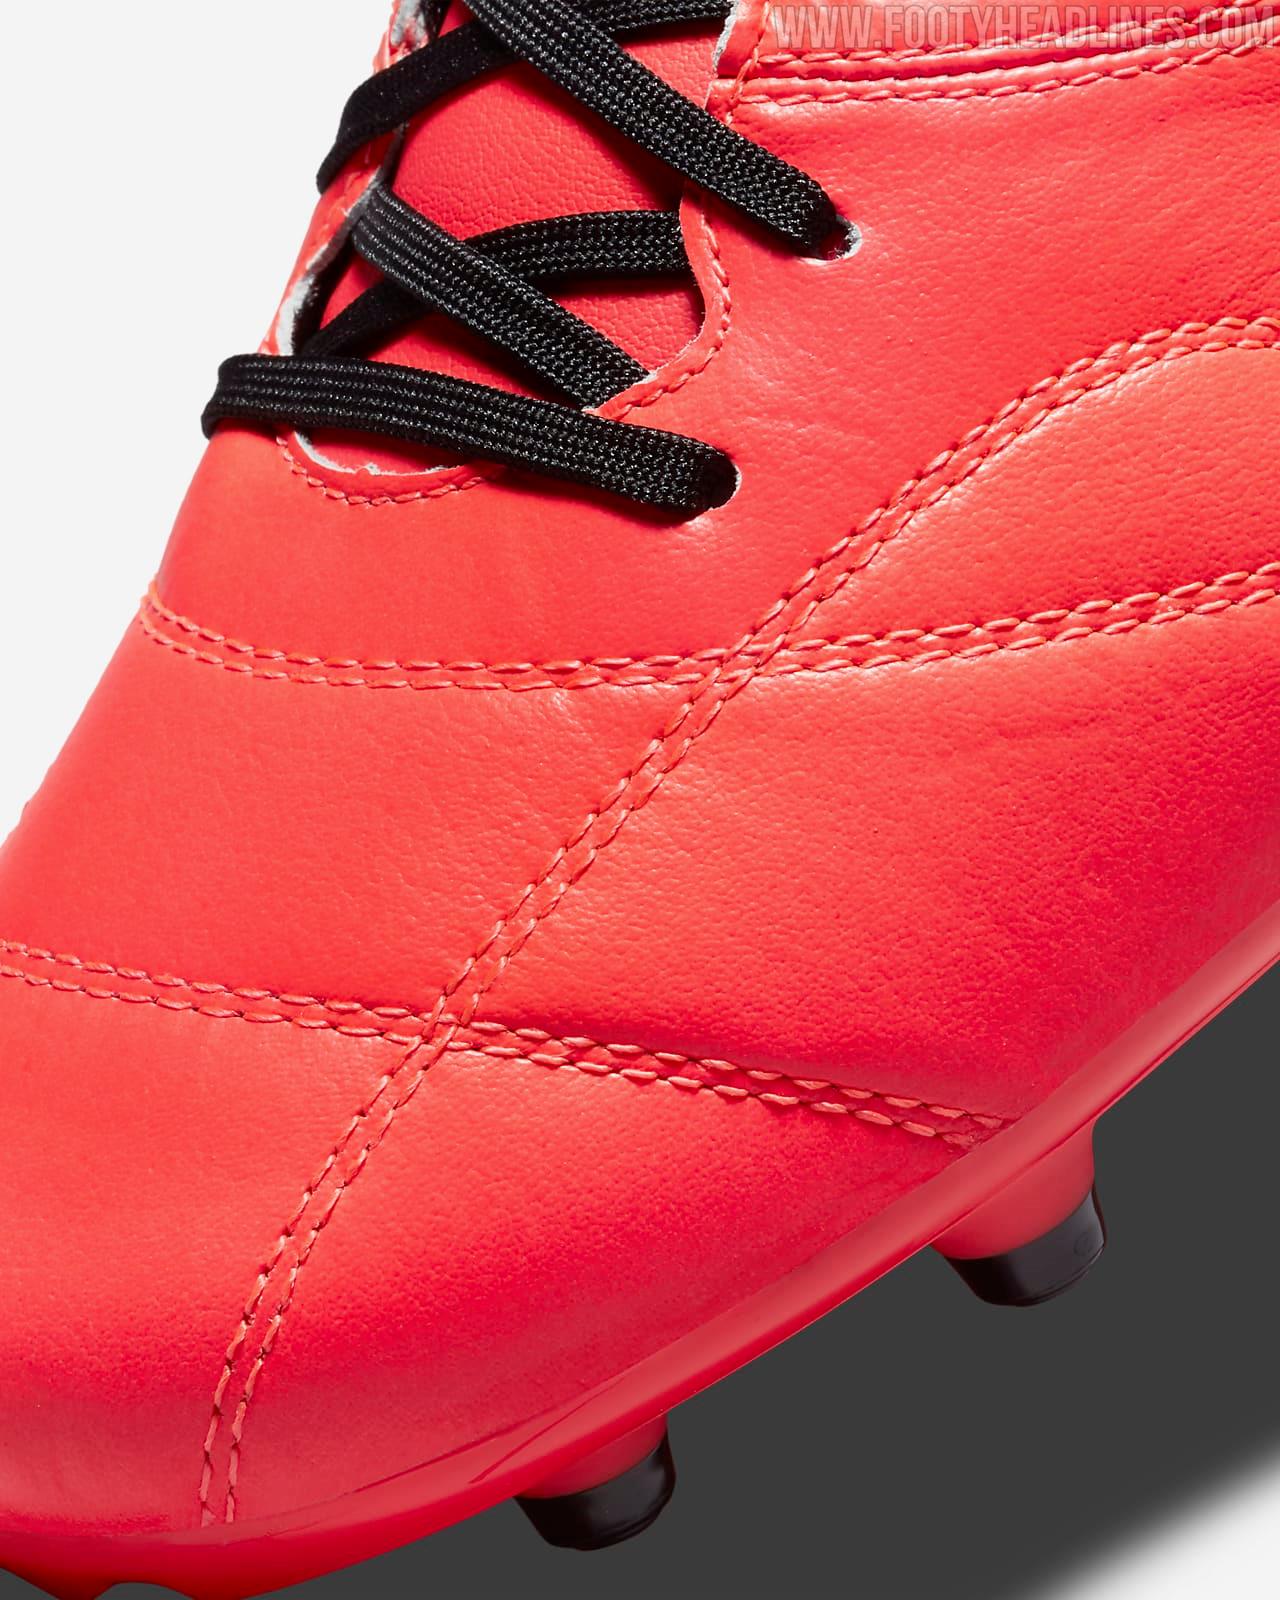 Nike Premier 2 Sala 'Joga TV' Boots Released - Footy Headlines